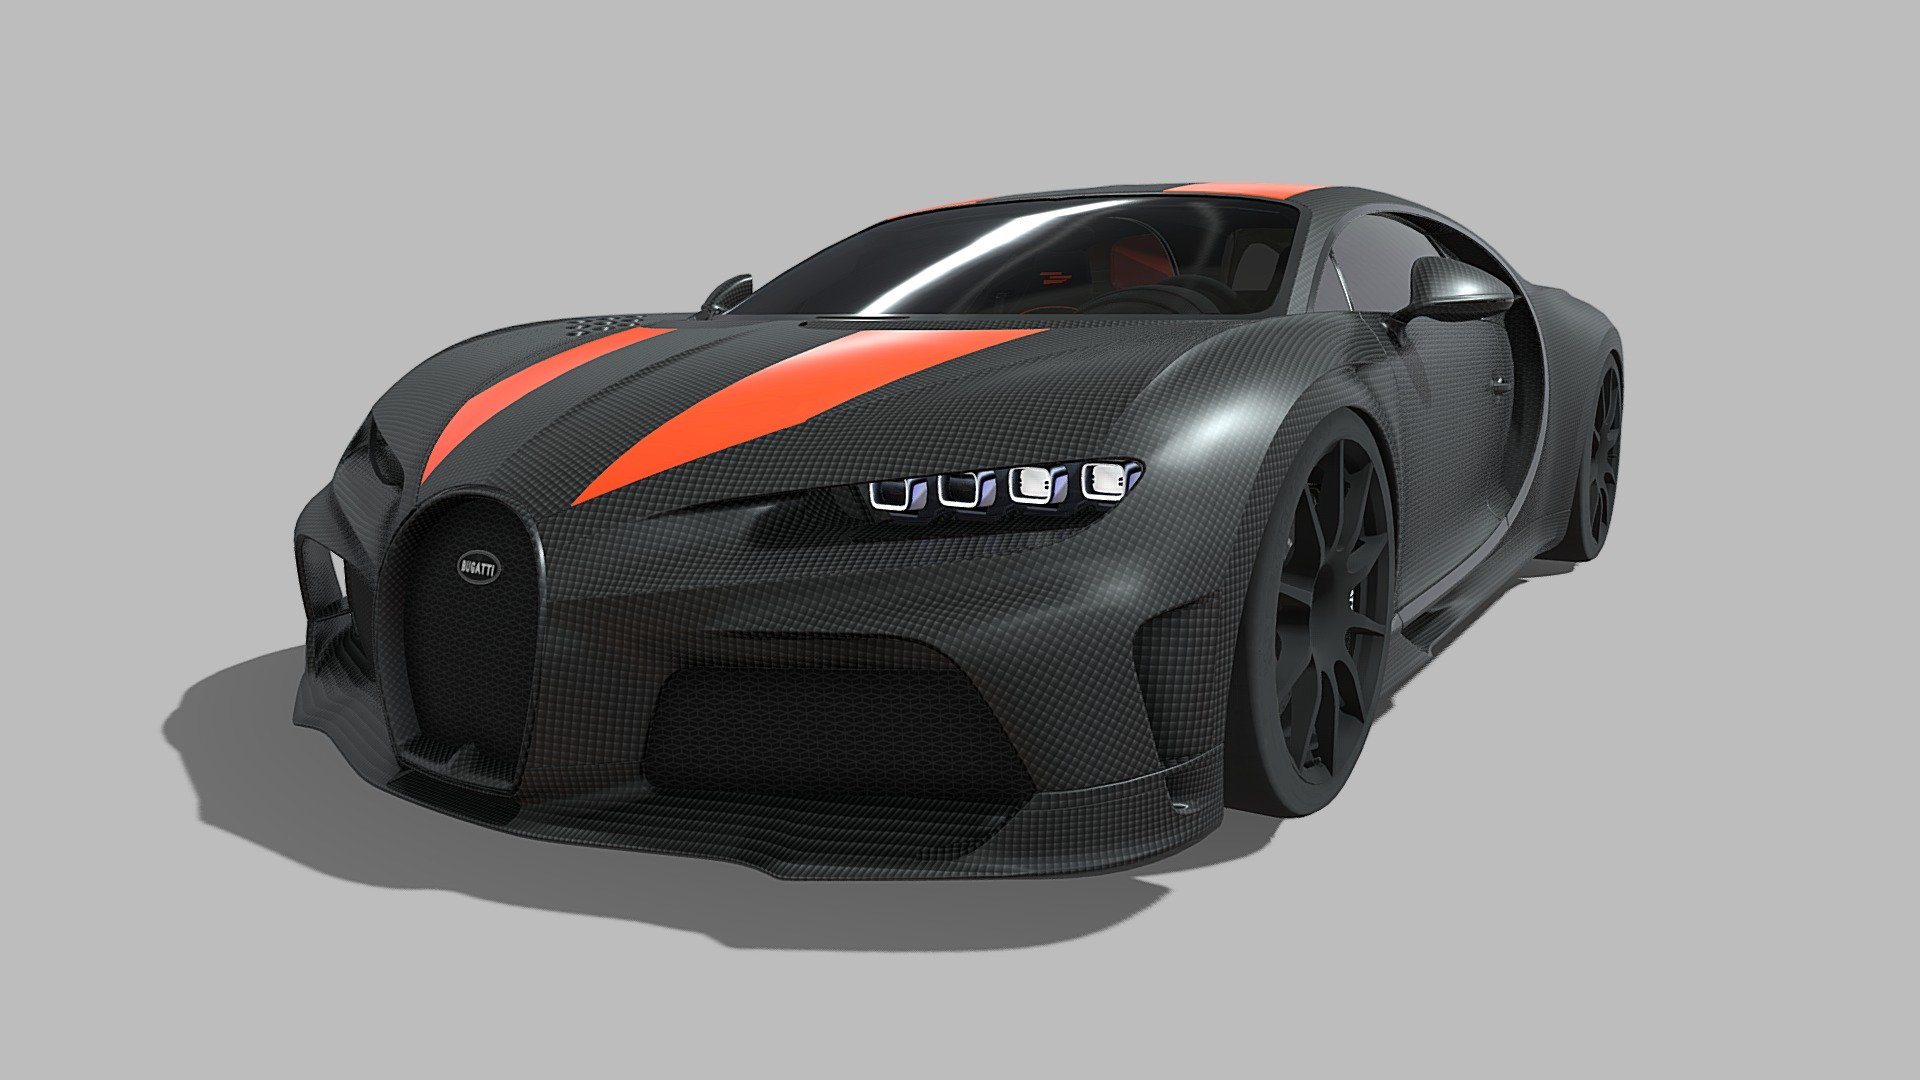 Bugatti Chiron Super Sport 300+ - 3D Model by davedesign